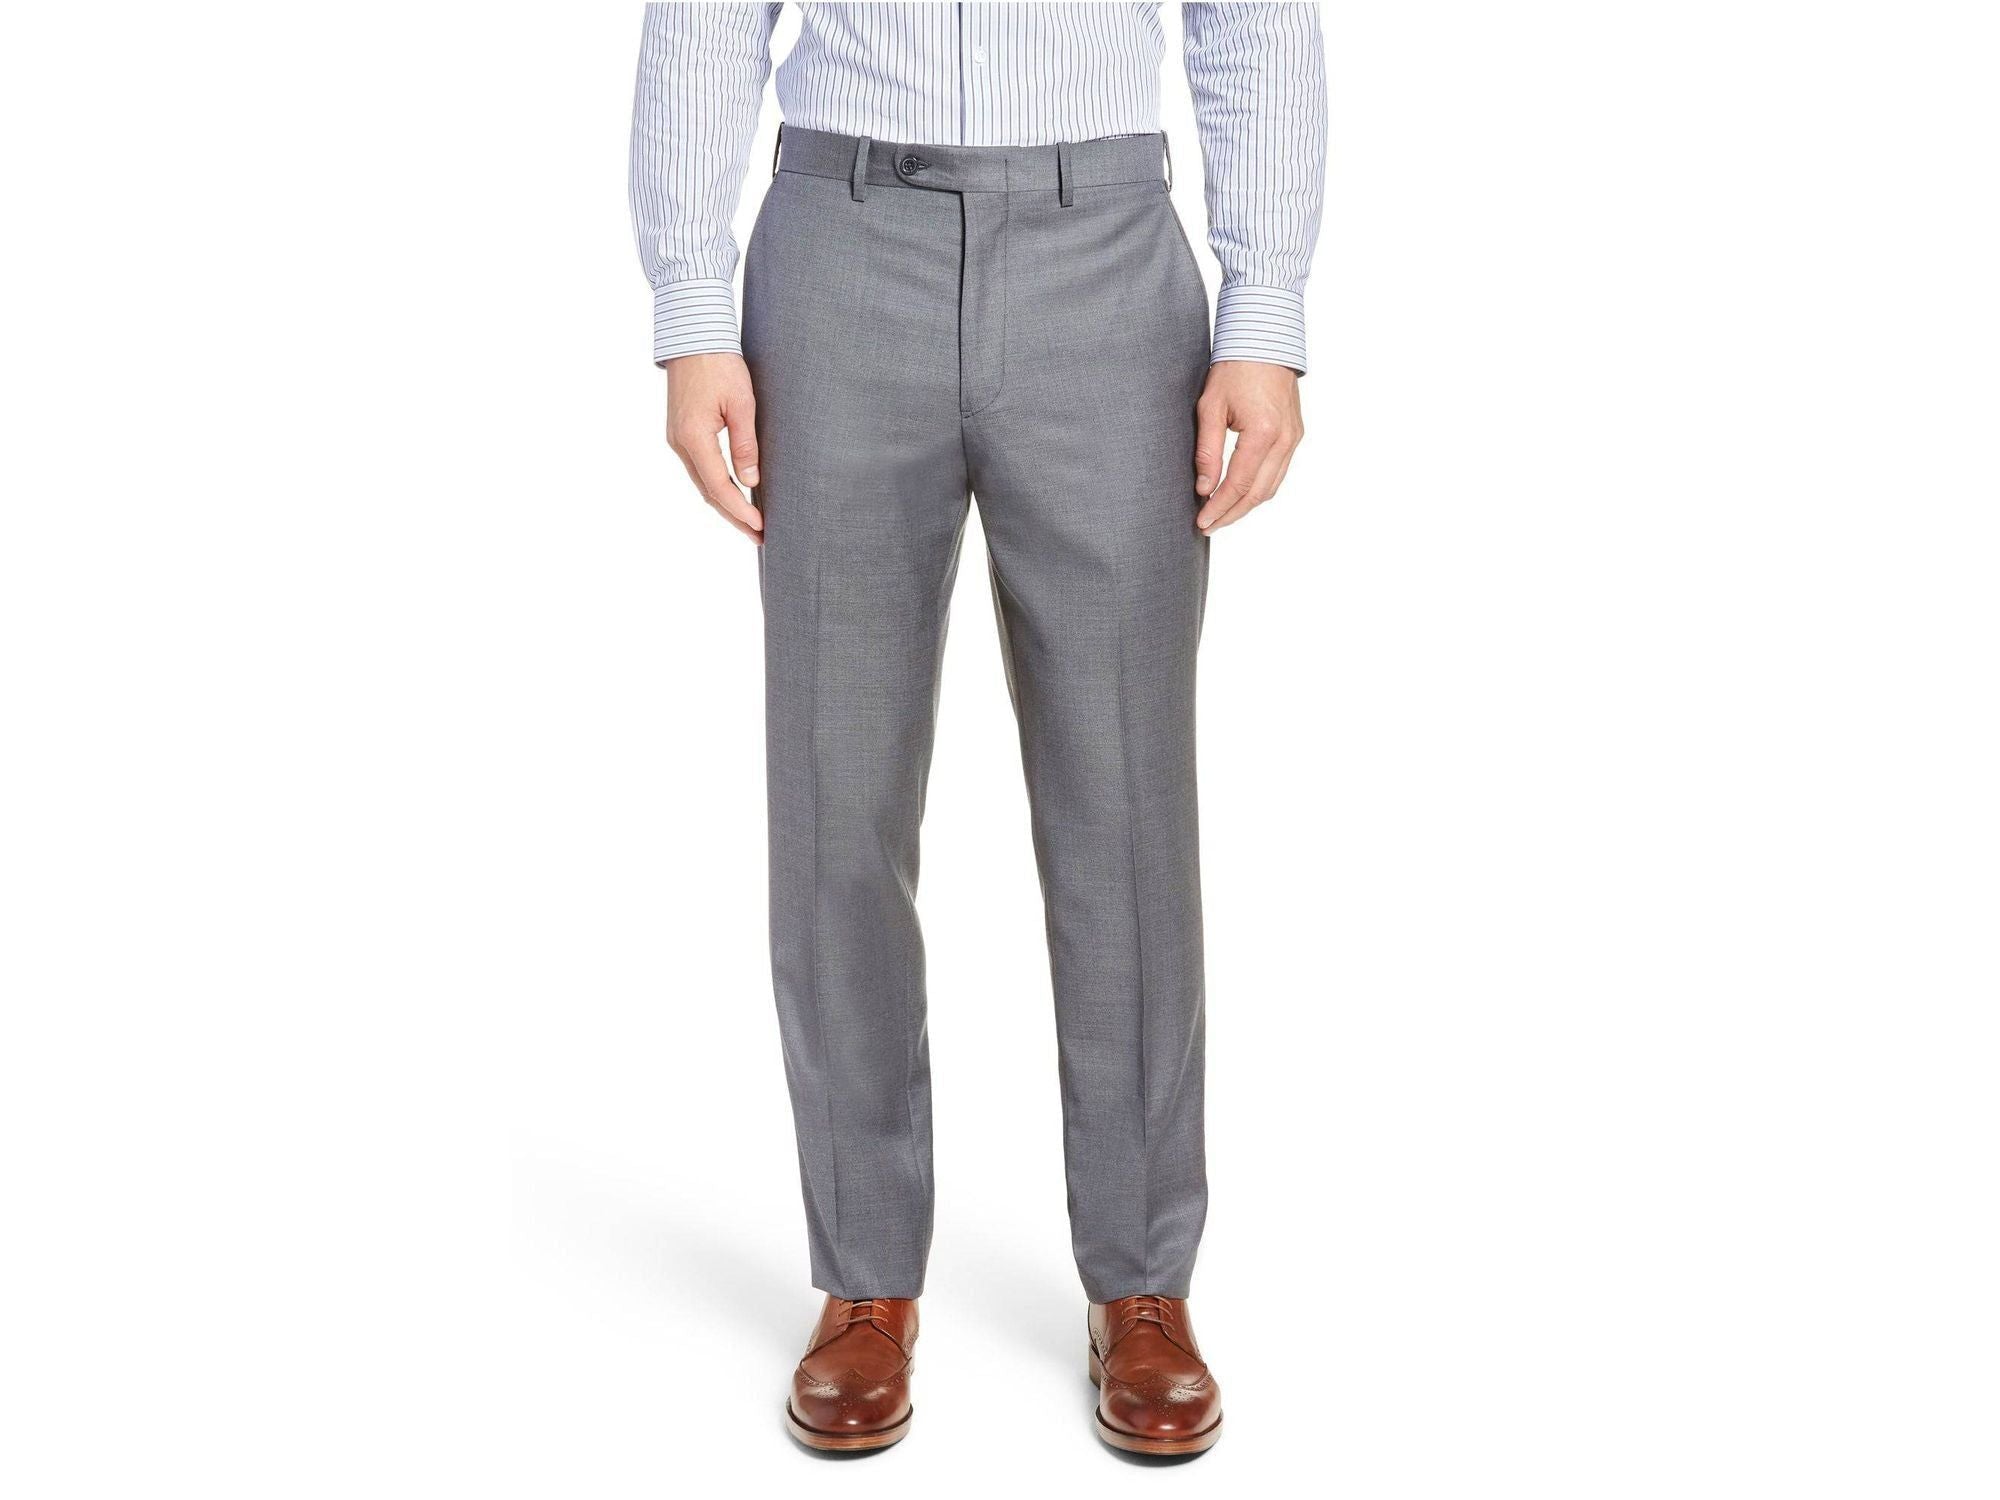 Light Grey Superlux Flat Front Dress Slack - Rainwater's Men's Clothing and Tuxedo Rental